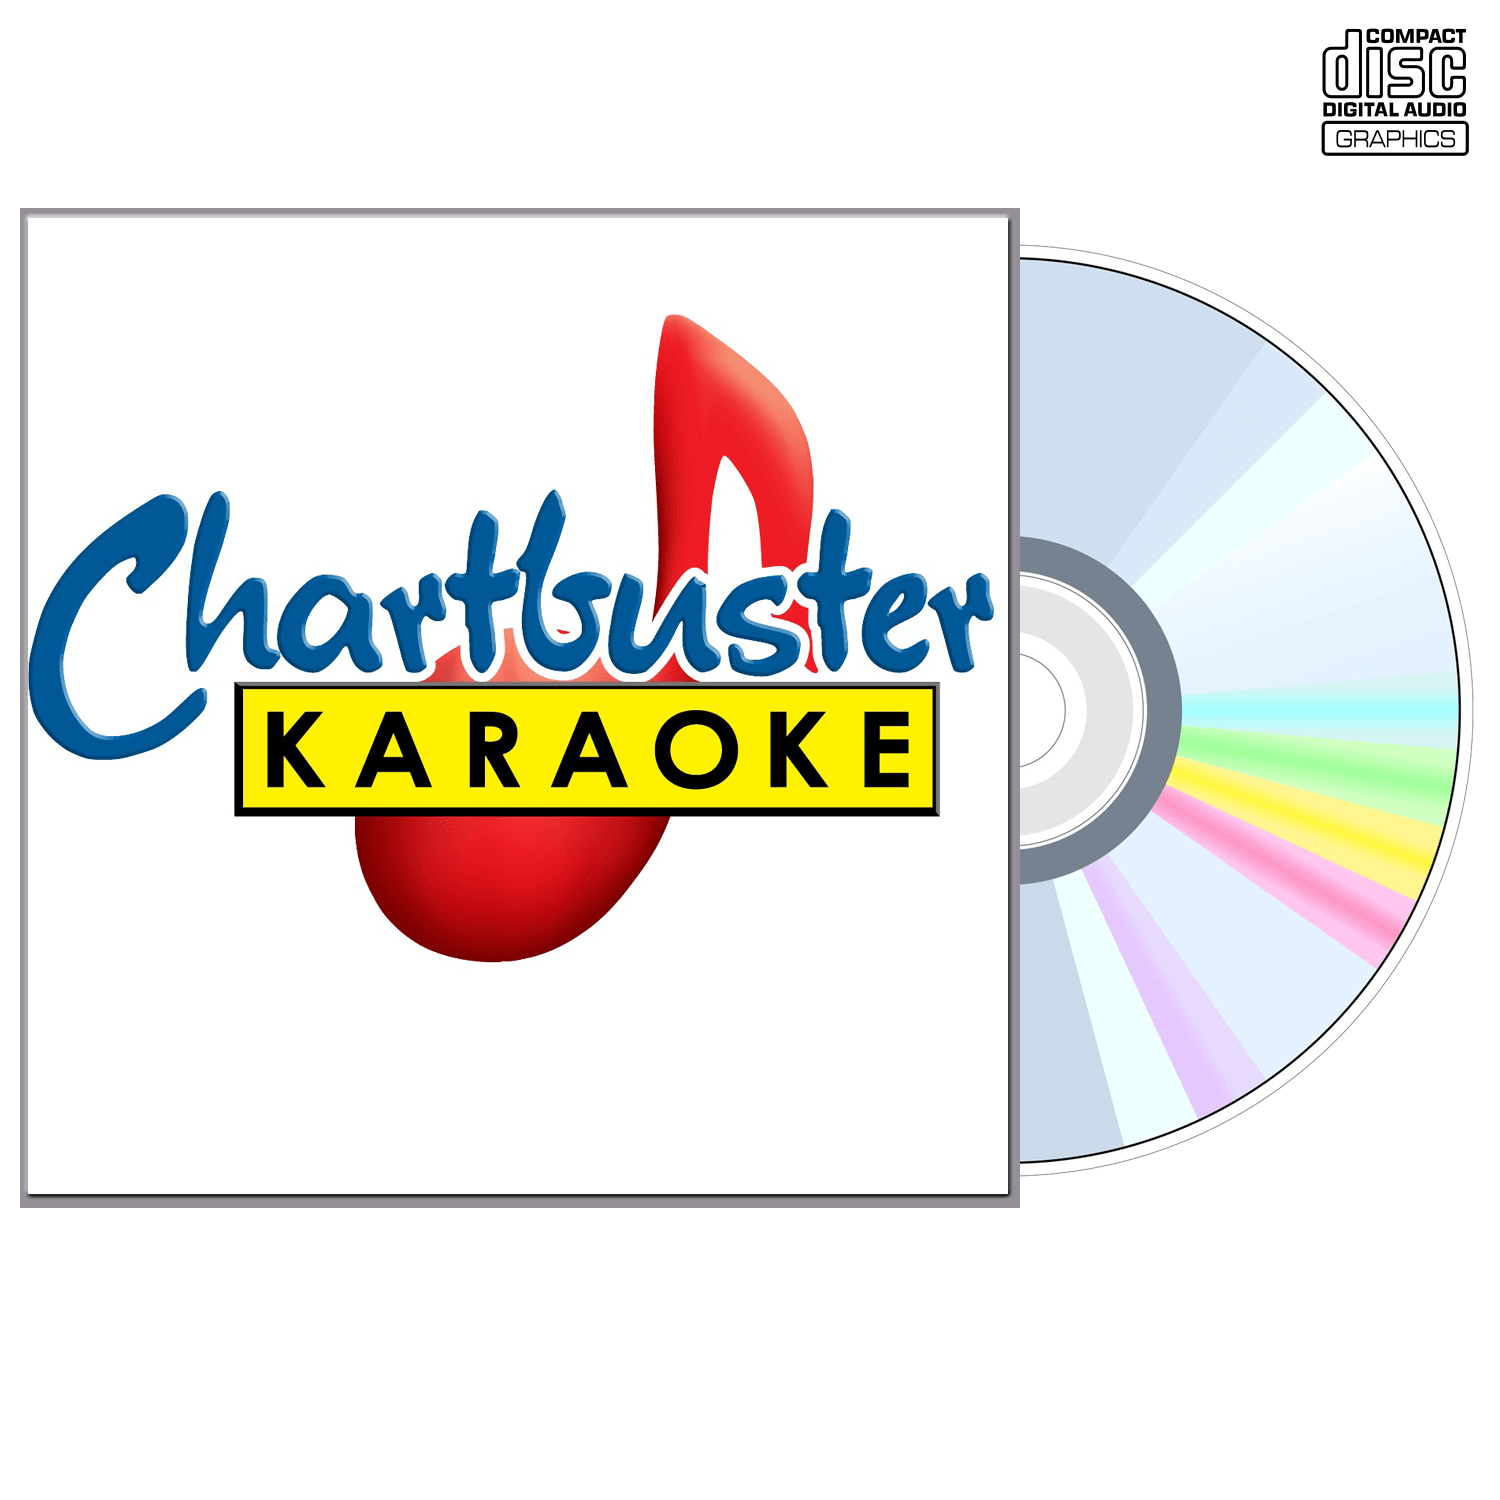 Jewel - CD+G - Chartbuster Karaoke - Karaoke Home Entertainment